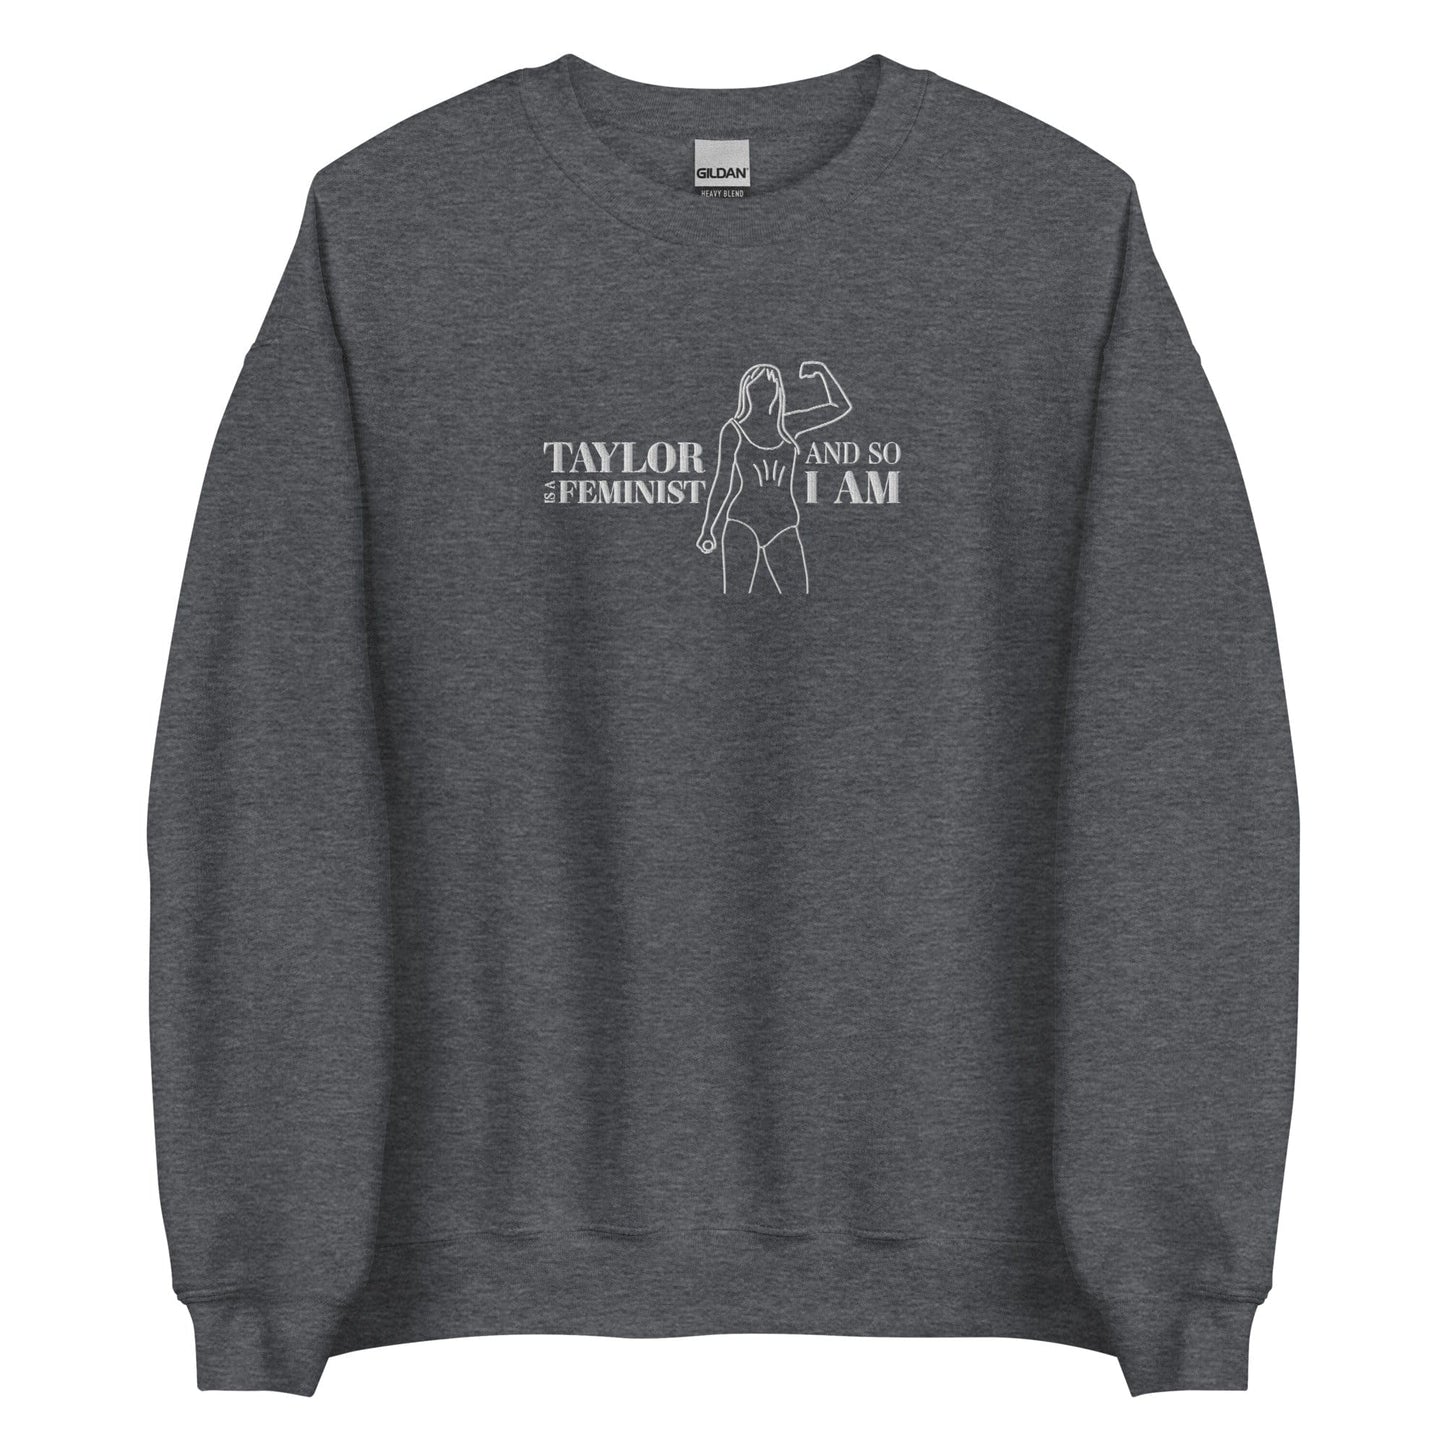 Taylor-embroidery-feminist-sweatshirt-dark-heather-front